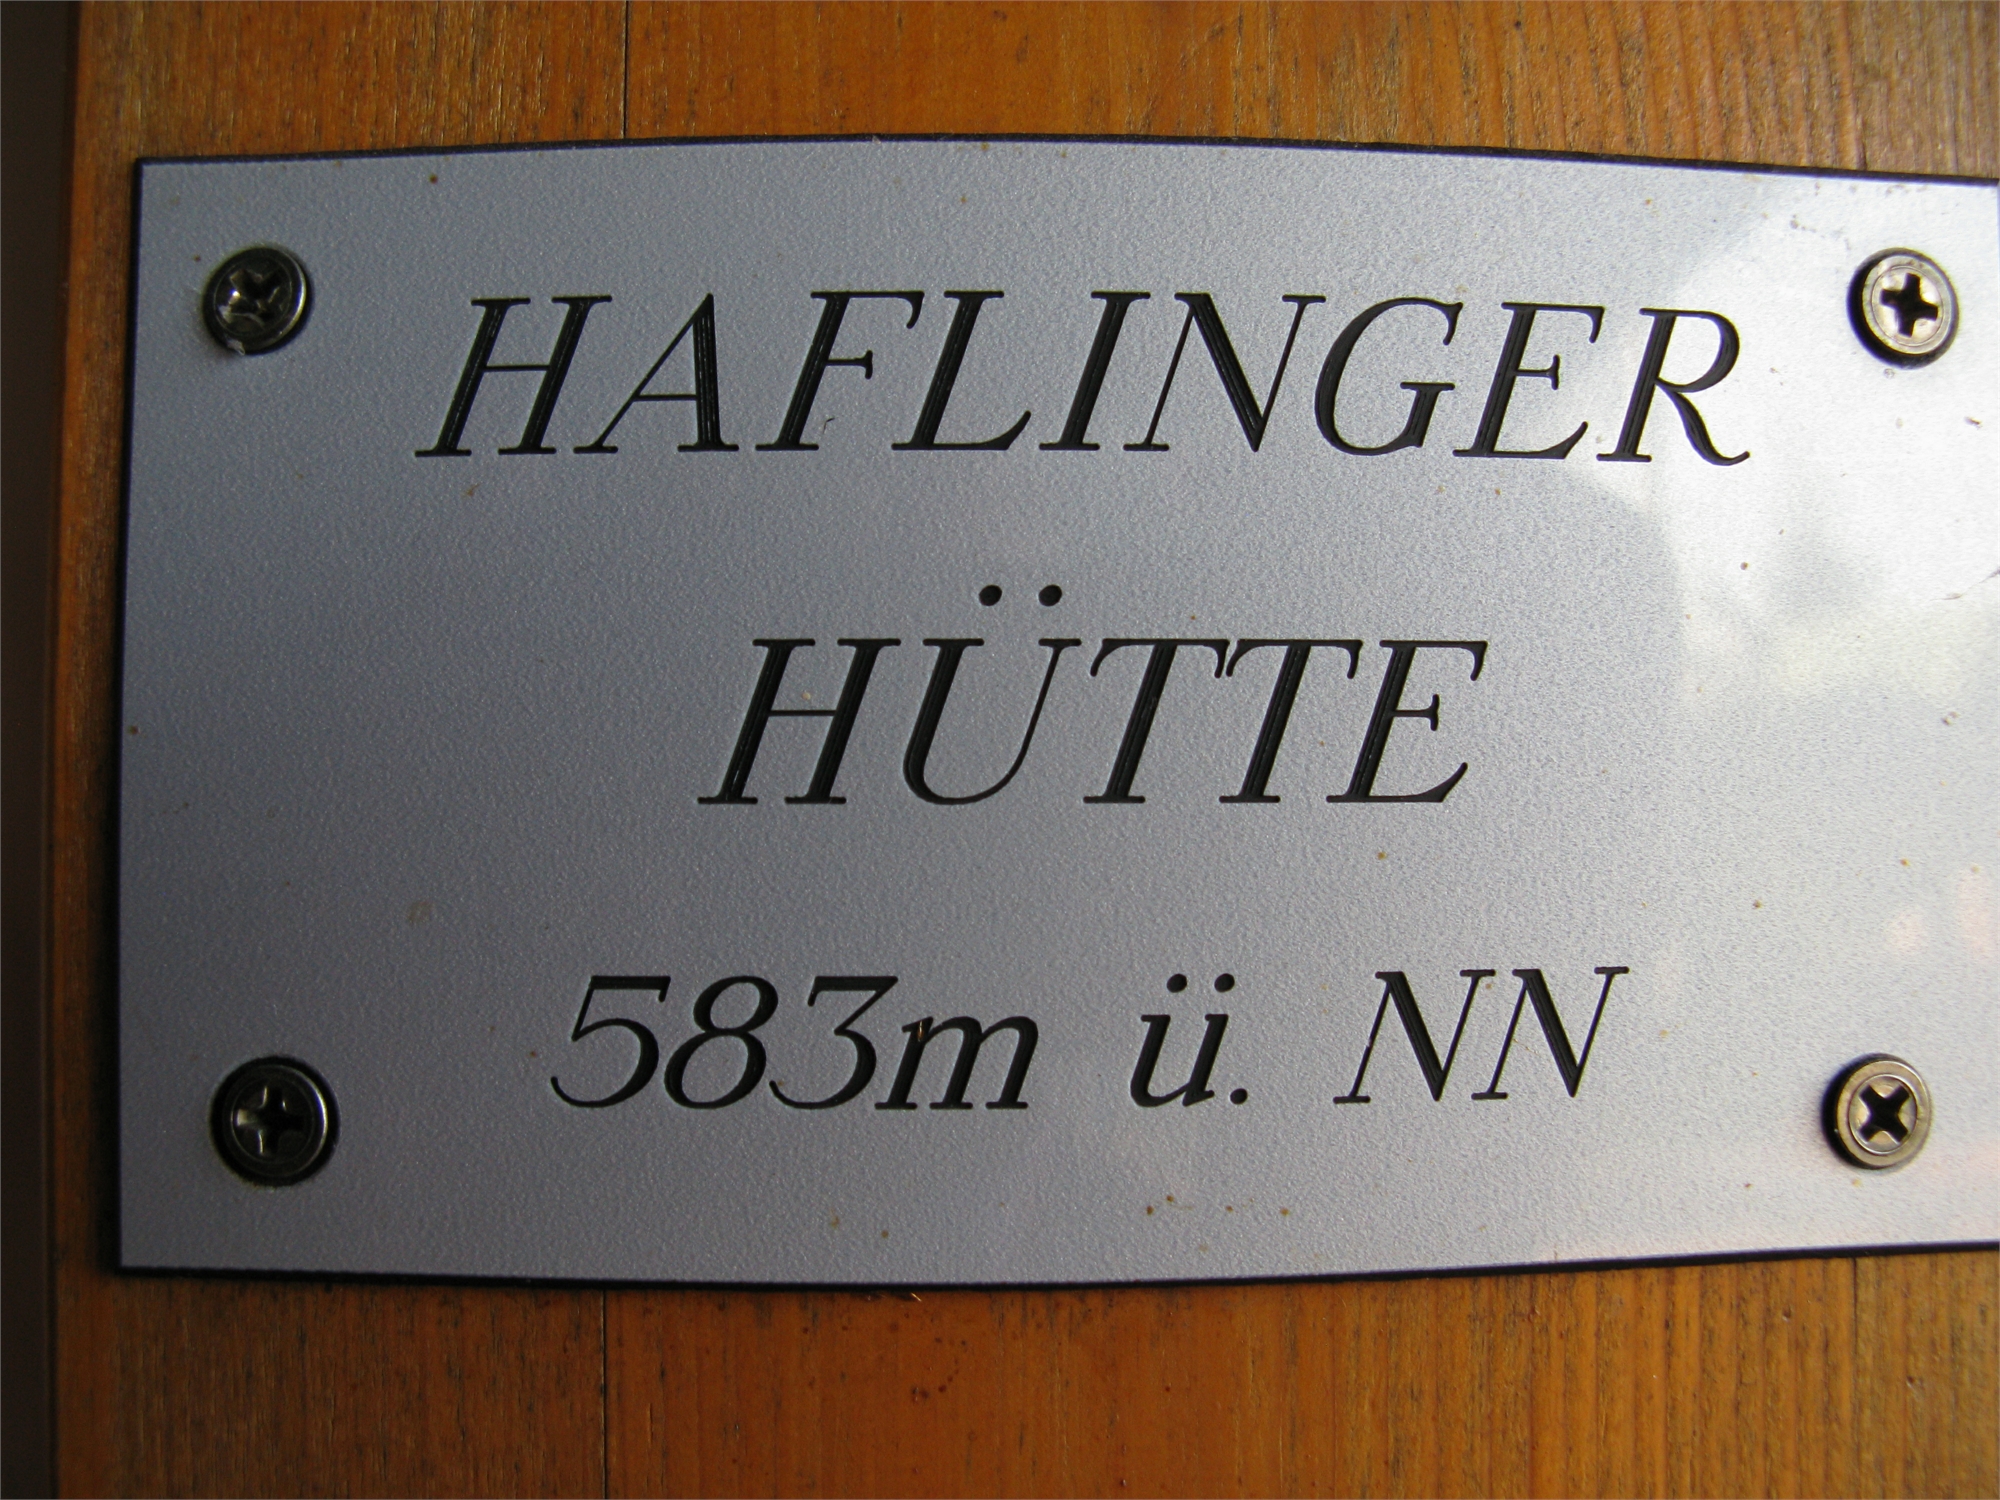 2016-haflinger-hc3bctte-25